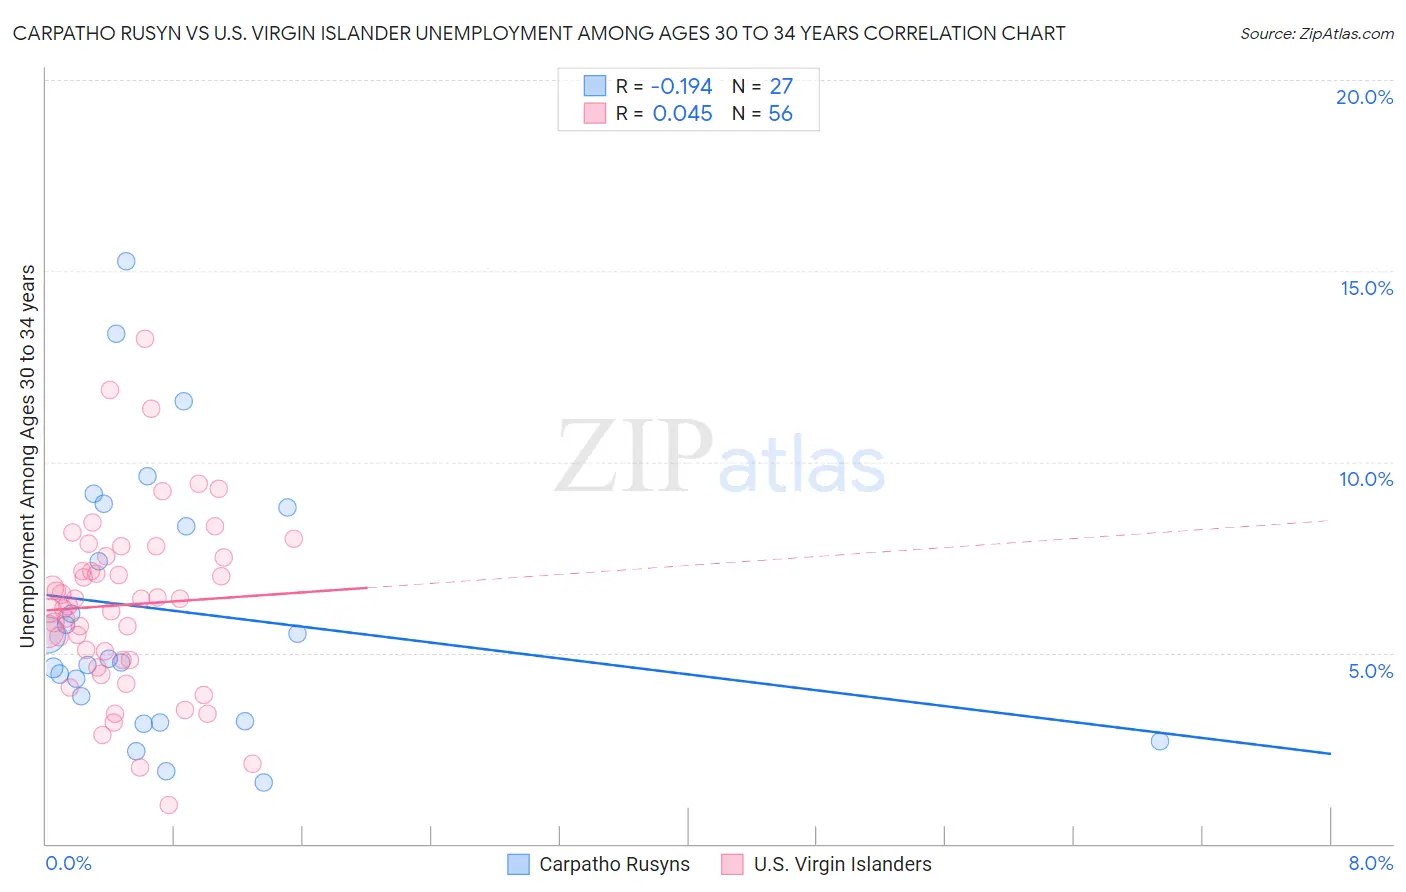 Carpatho Rusyn vs U.S. Virgin Islander Unemployment Among Ages 30 to 34 years